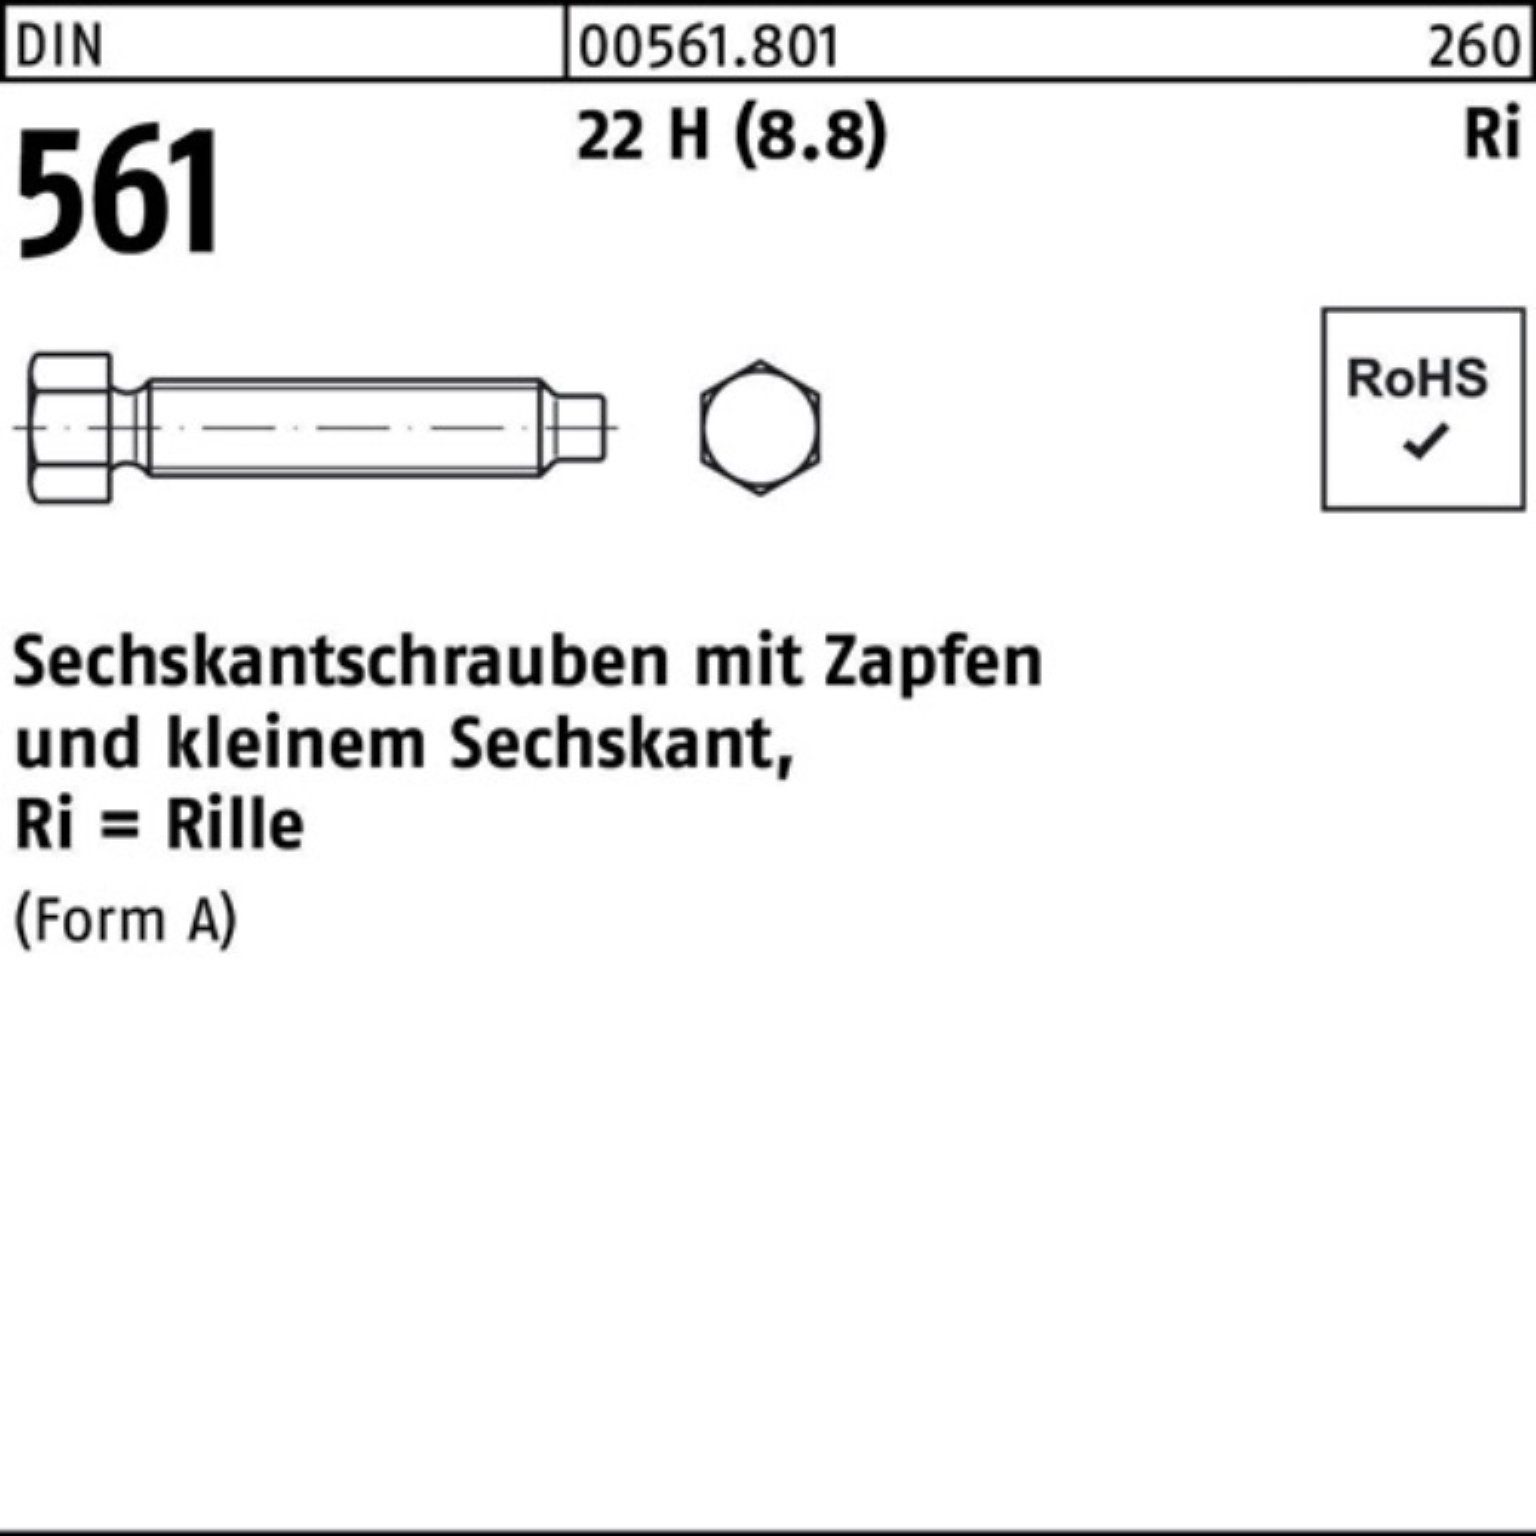 Reyher Pack 20x (8.8) AM 22 DIN Zapfen Sechskantschraube 10 100er 90 H 561 St Sechskantschraube